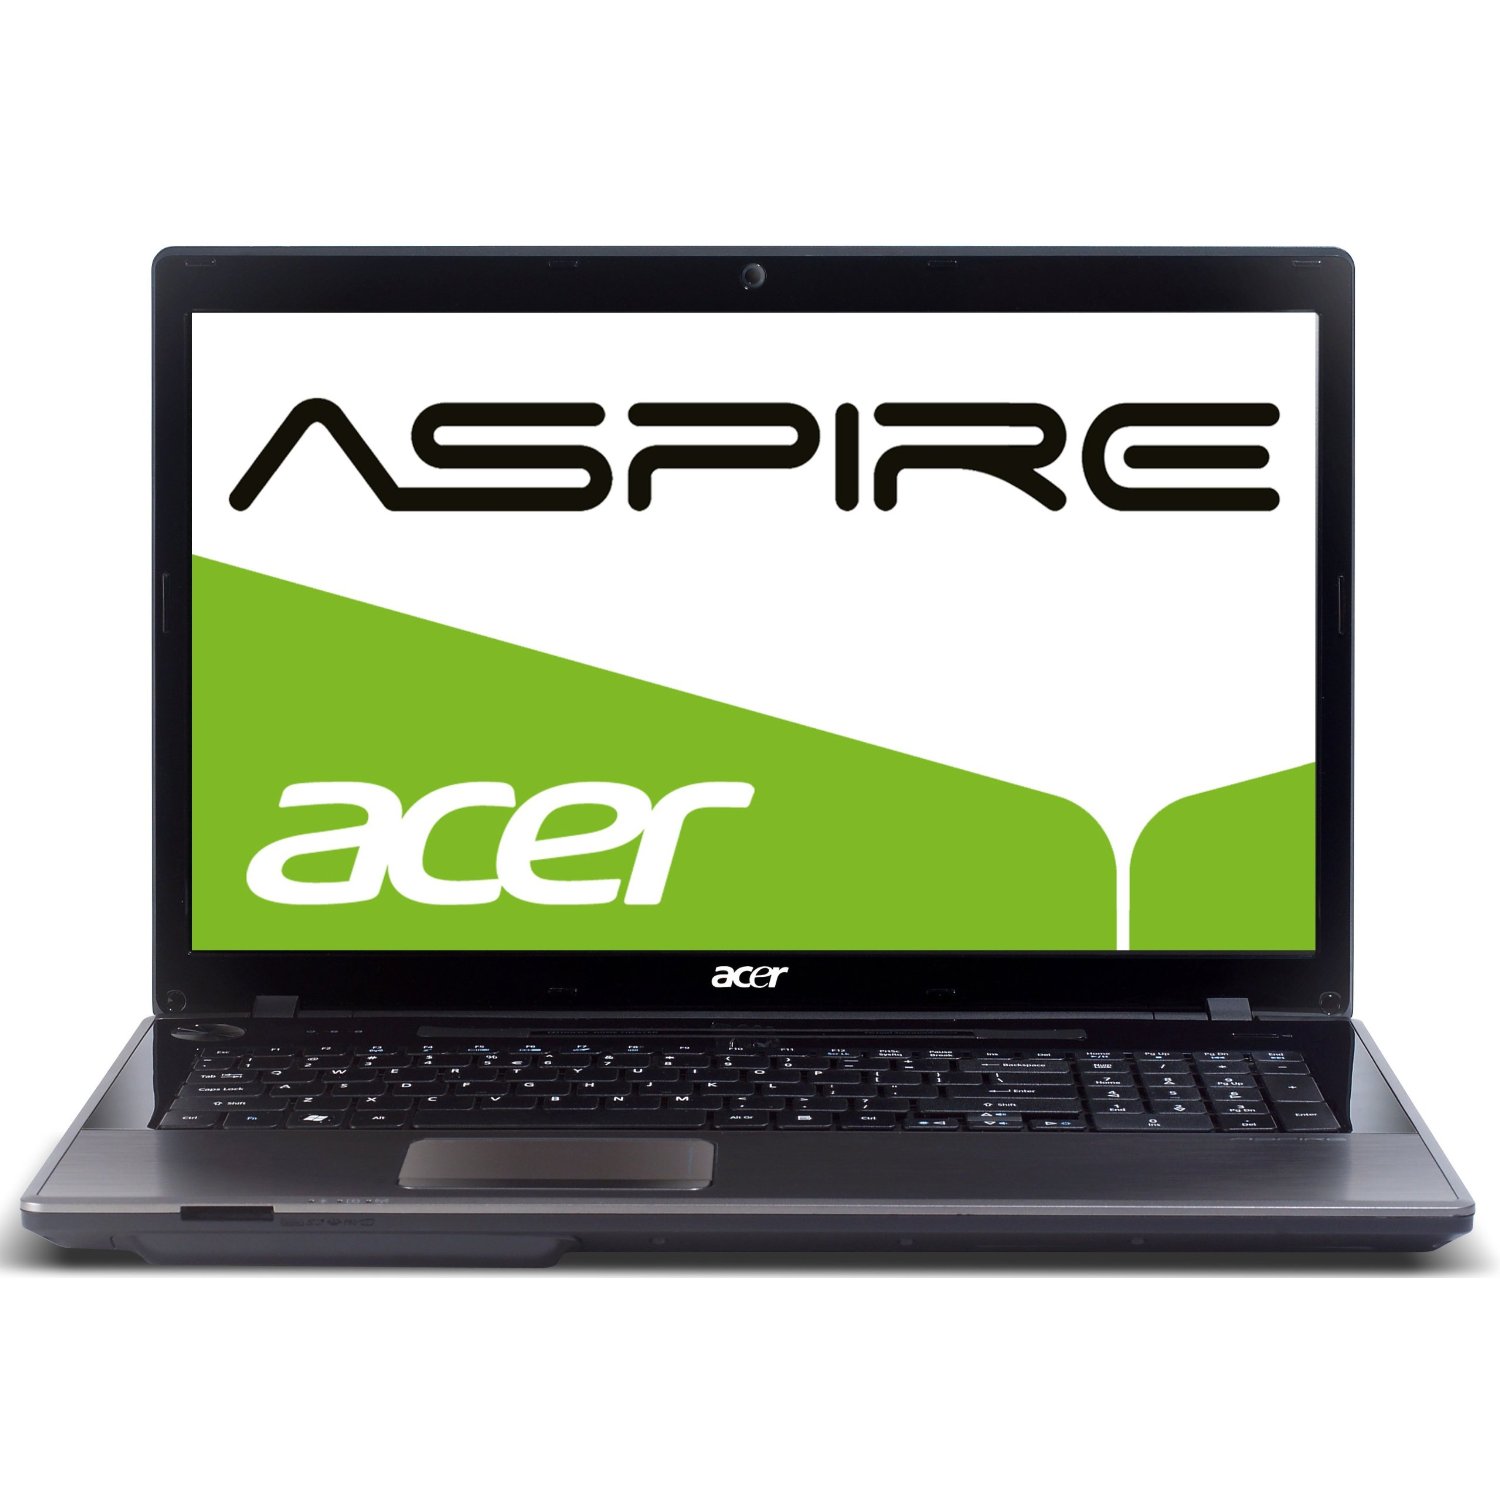 Aspire v5 характеристики. Acer Aspire v3-771g. Acer Aspire v3 571. Acer Aspire v3-771. Acer v3 771g.